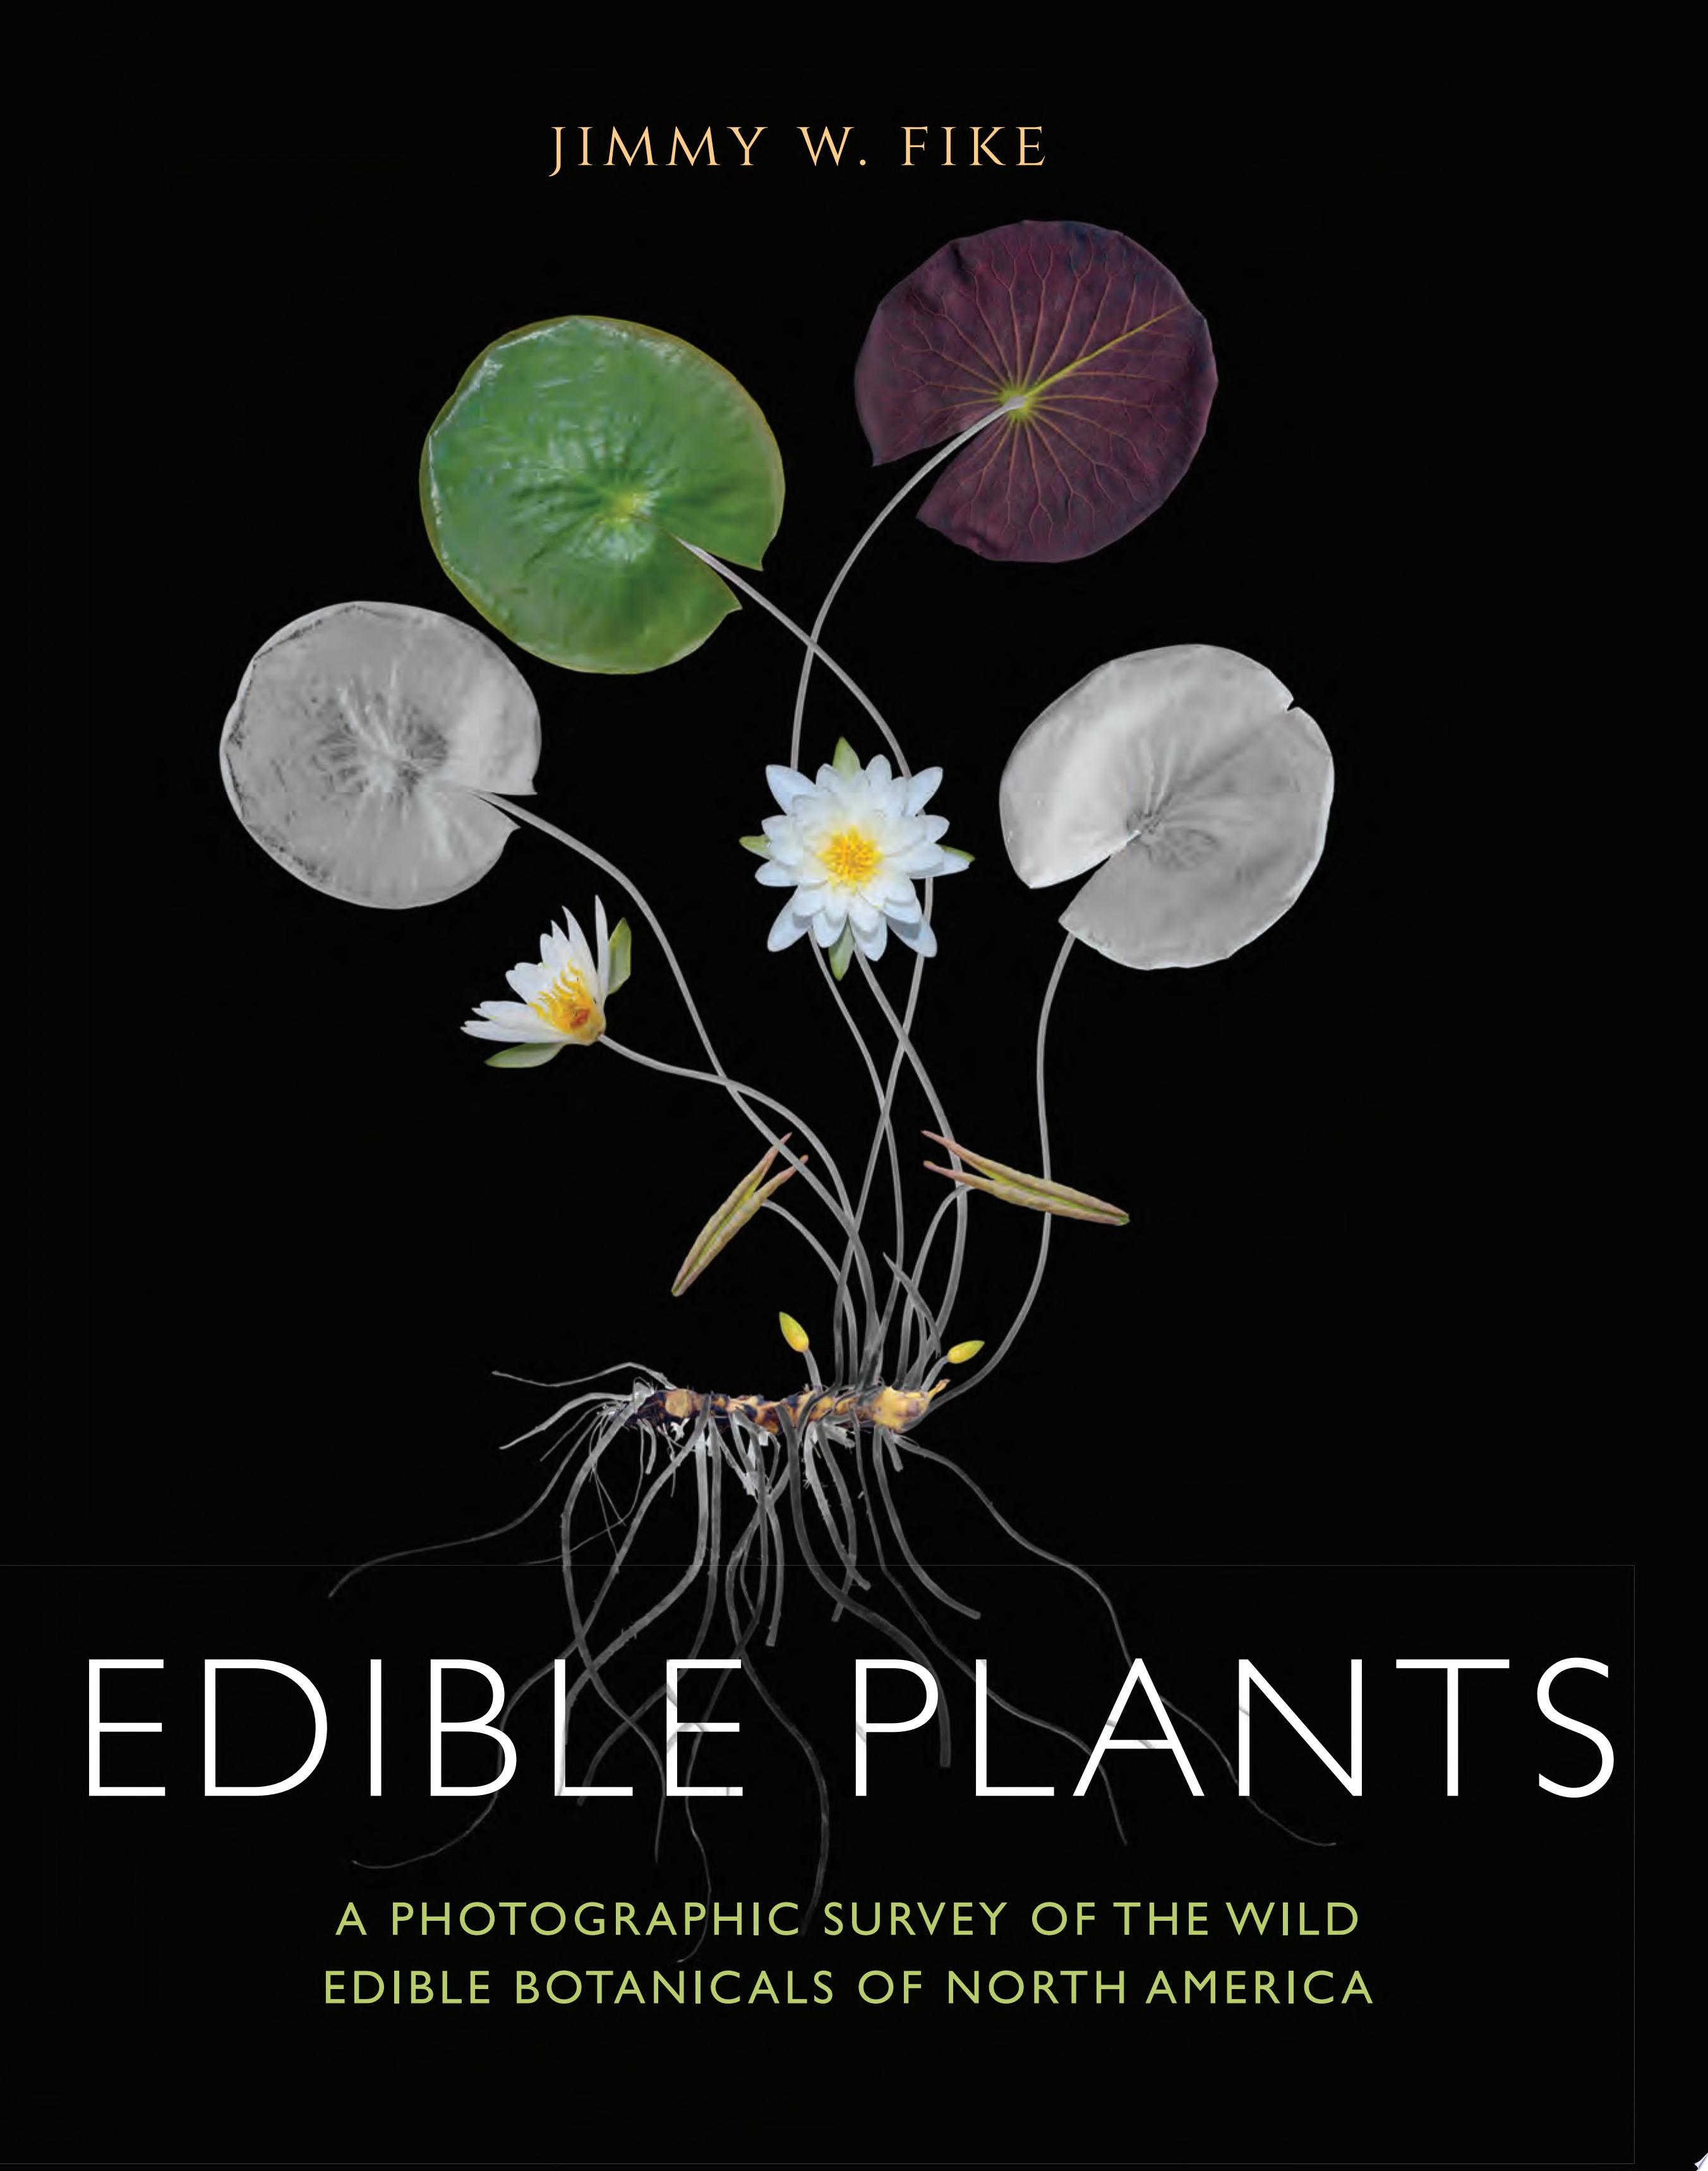 Image for "Edible Plants"